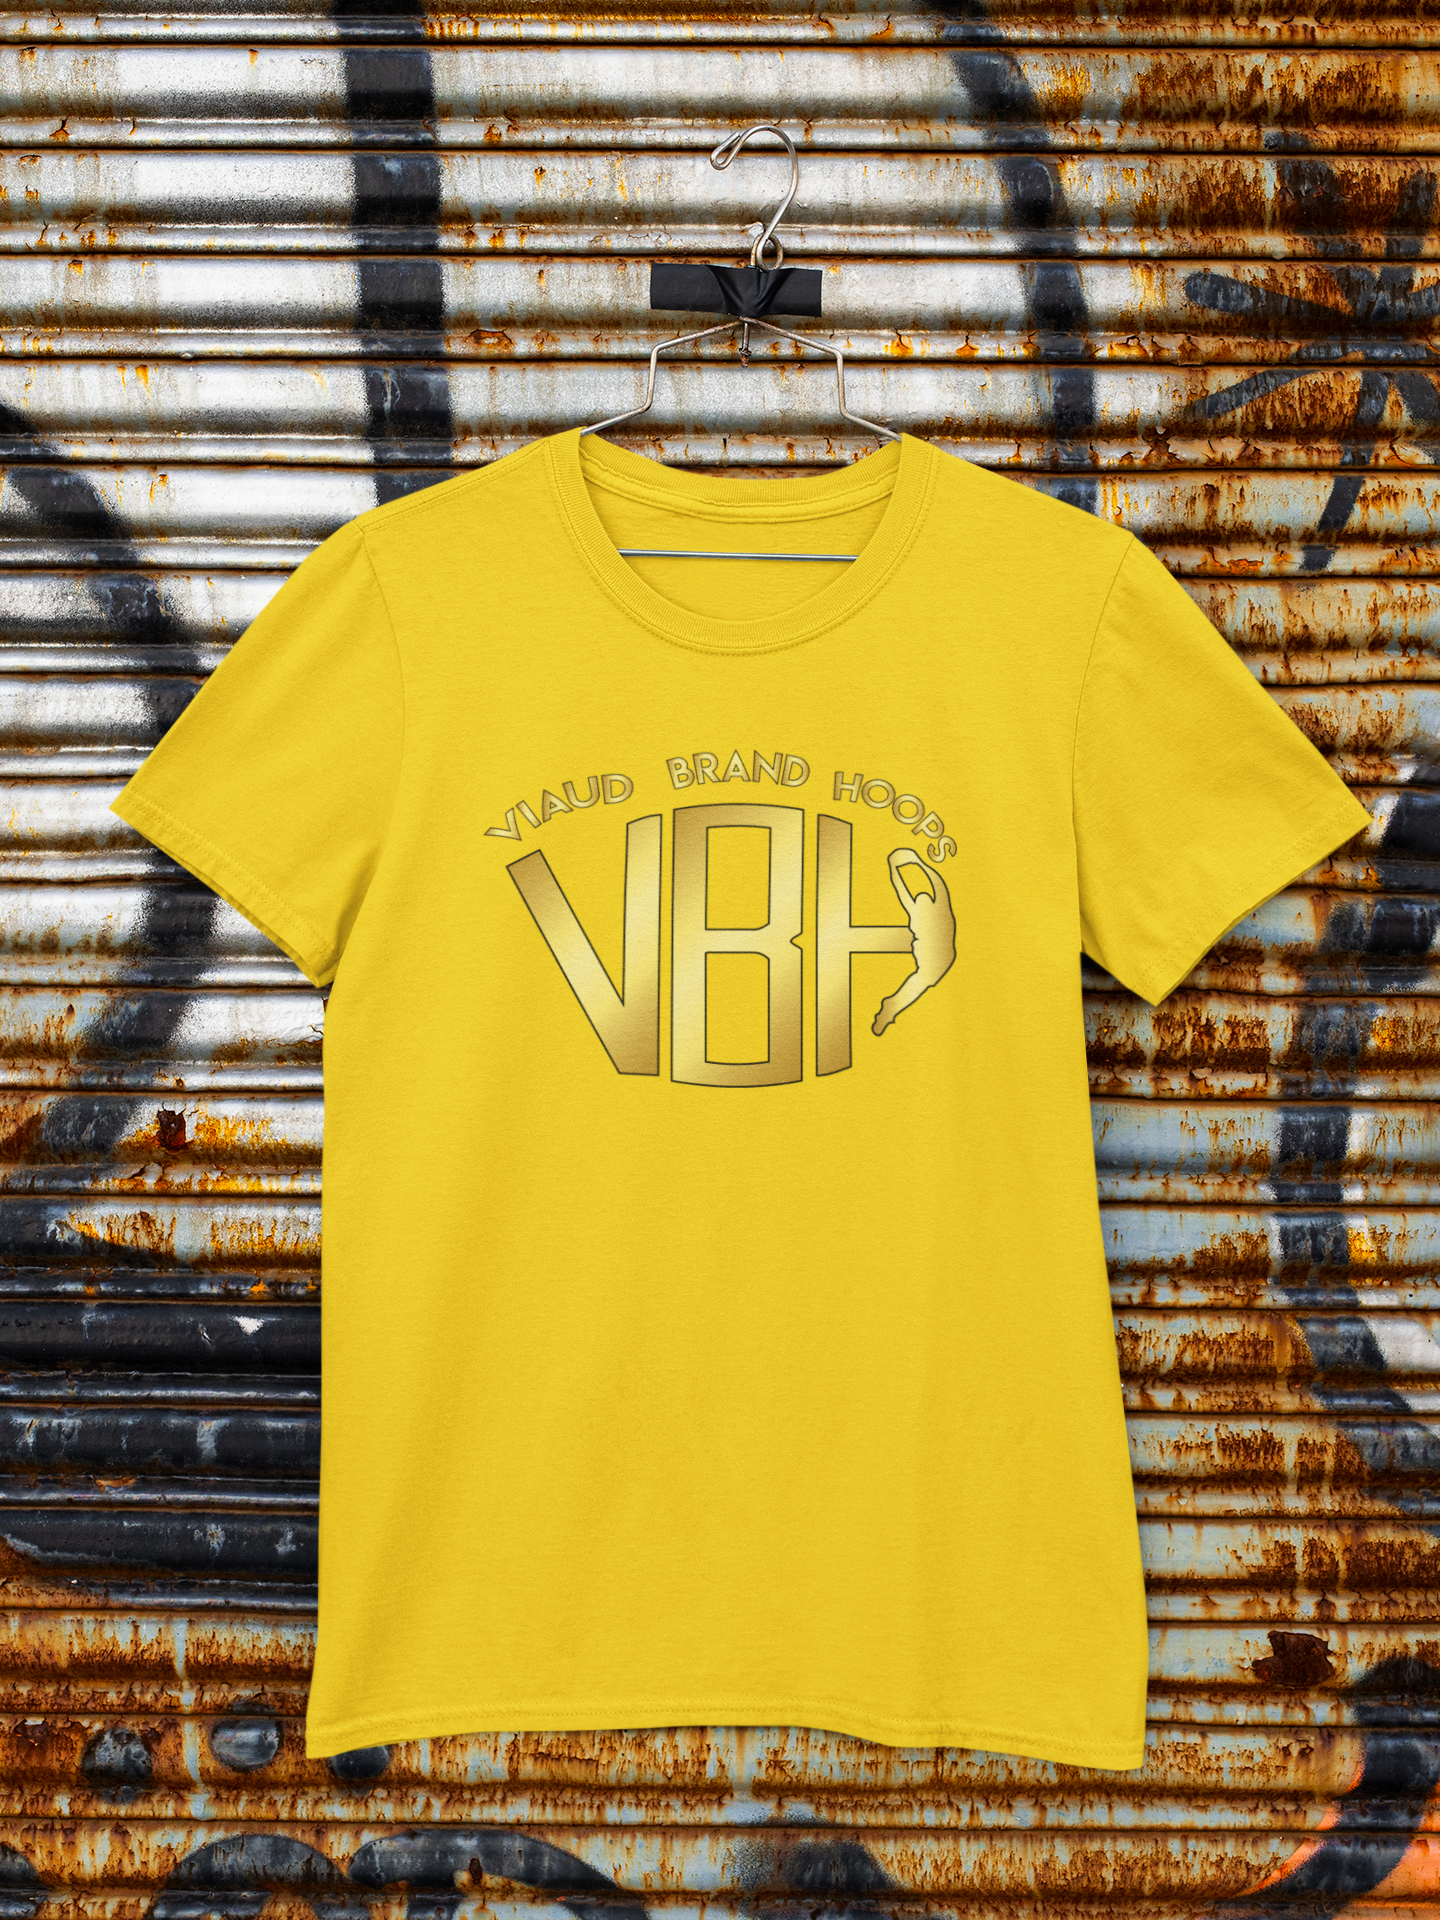 Youth T-Shirt - (Viaud Brand Hoops)